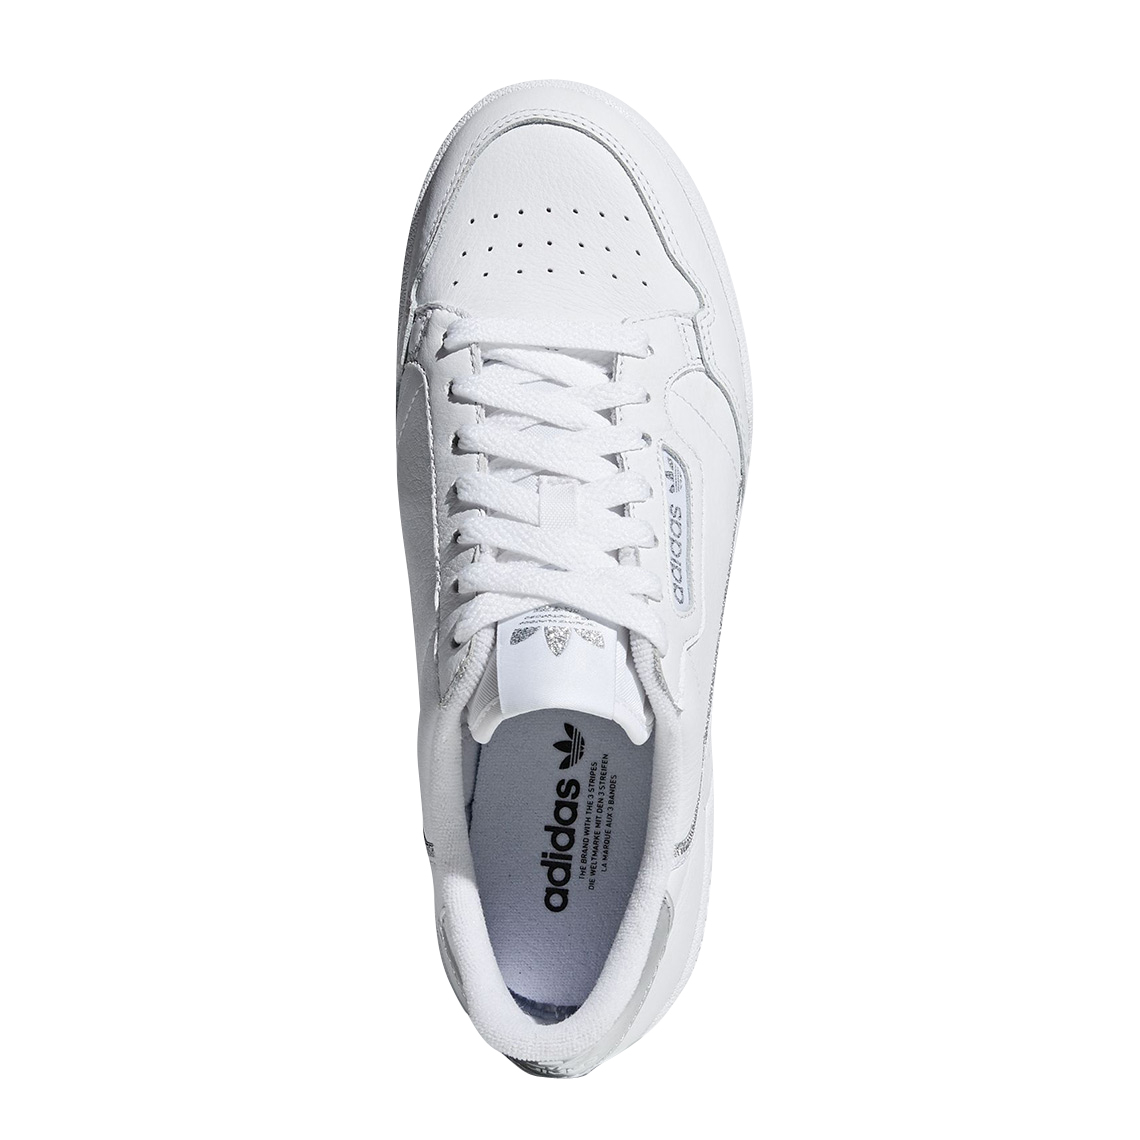 adidas Continental 80 White Silver EE8925 - KicksOnFire.com